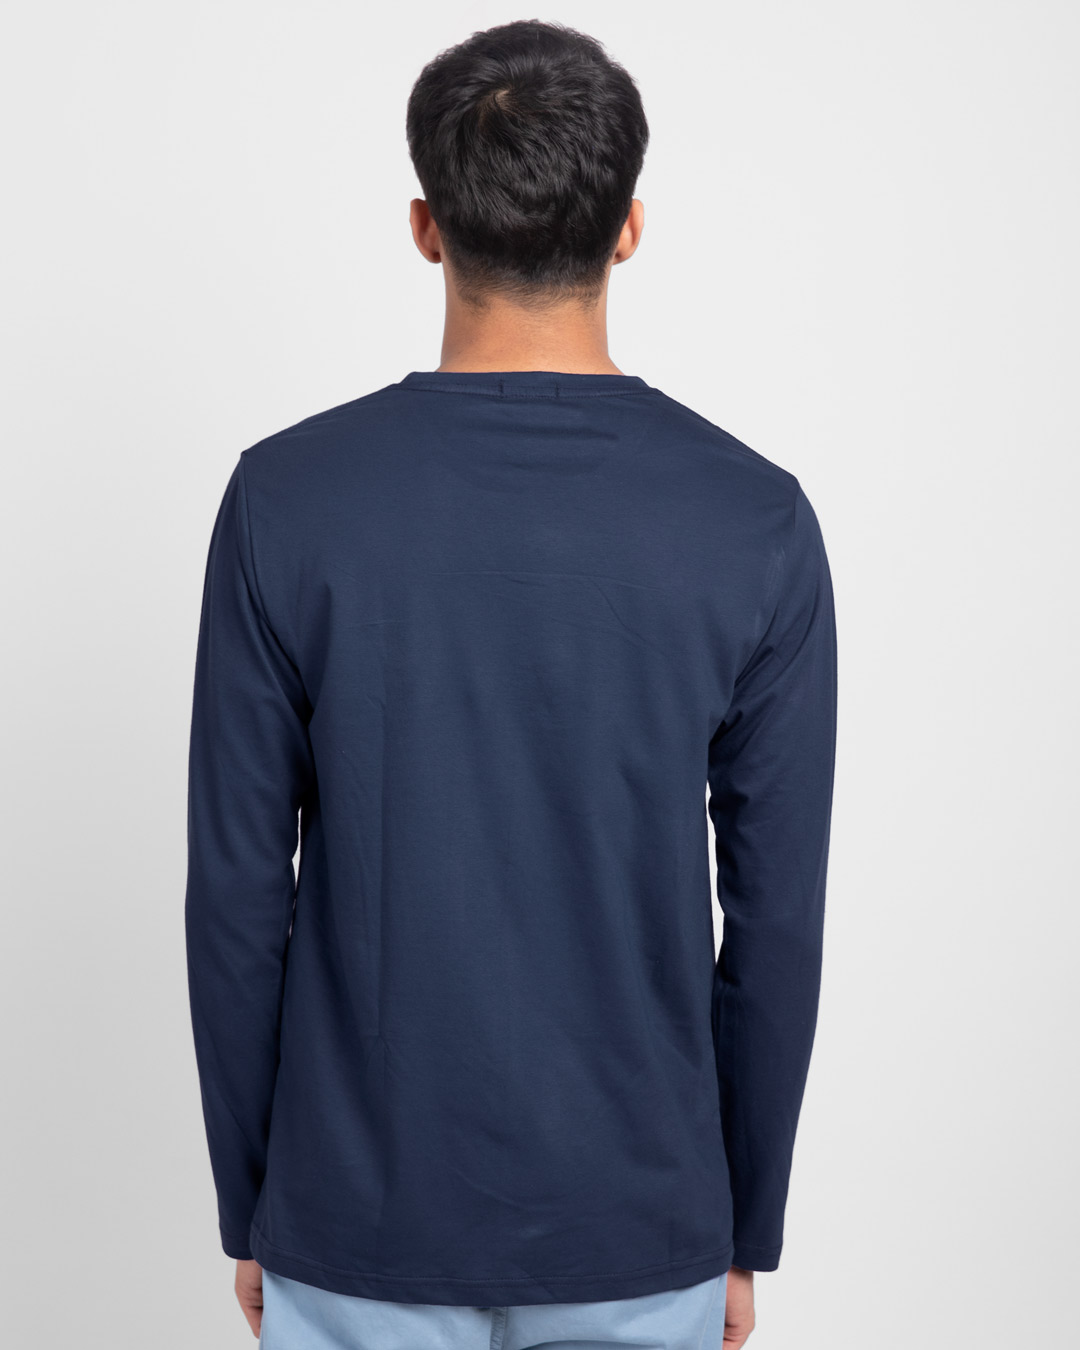 Shop Marvelrine Full Sleeve T-Shirt (XML)-Back